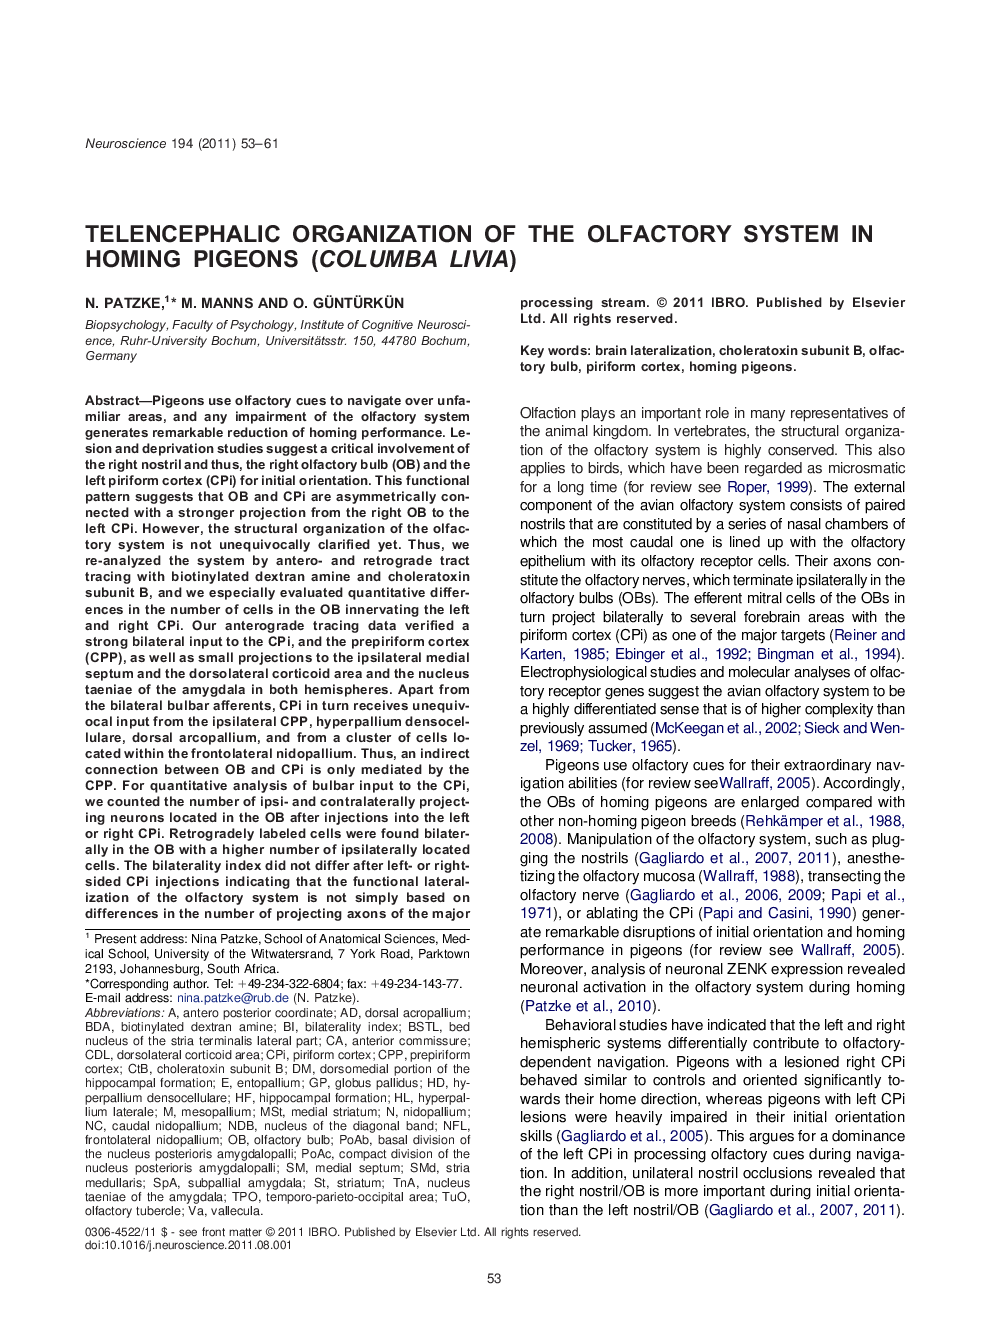 Telencephalic organization of the olfactory system in homing pigeons (Columba livia)